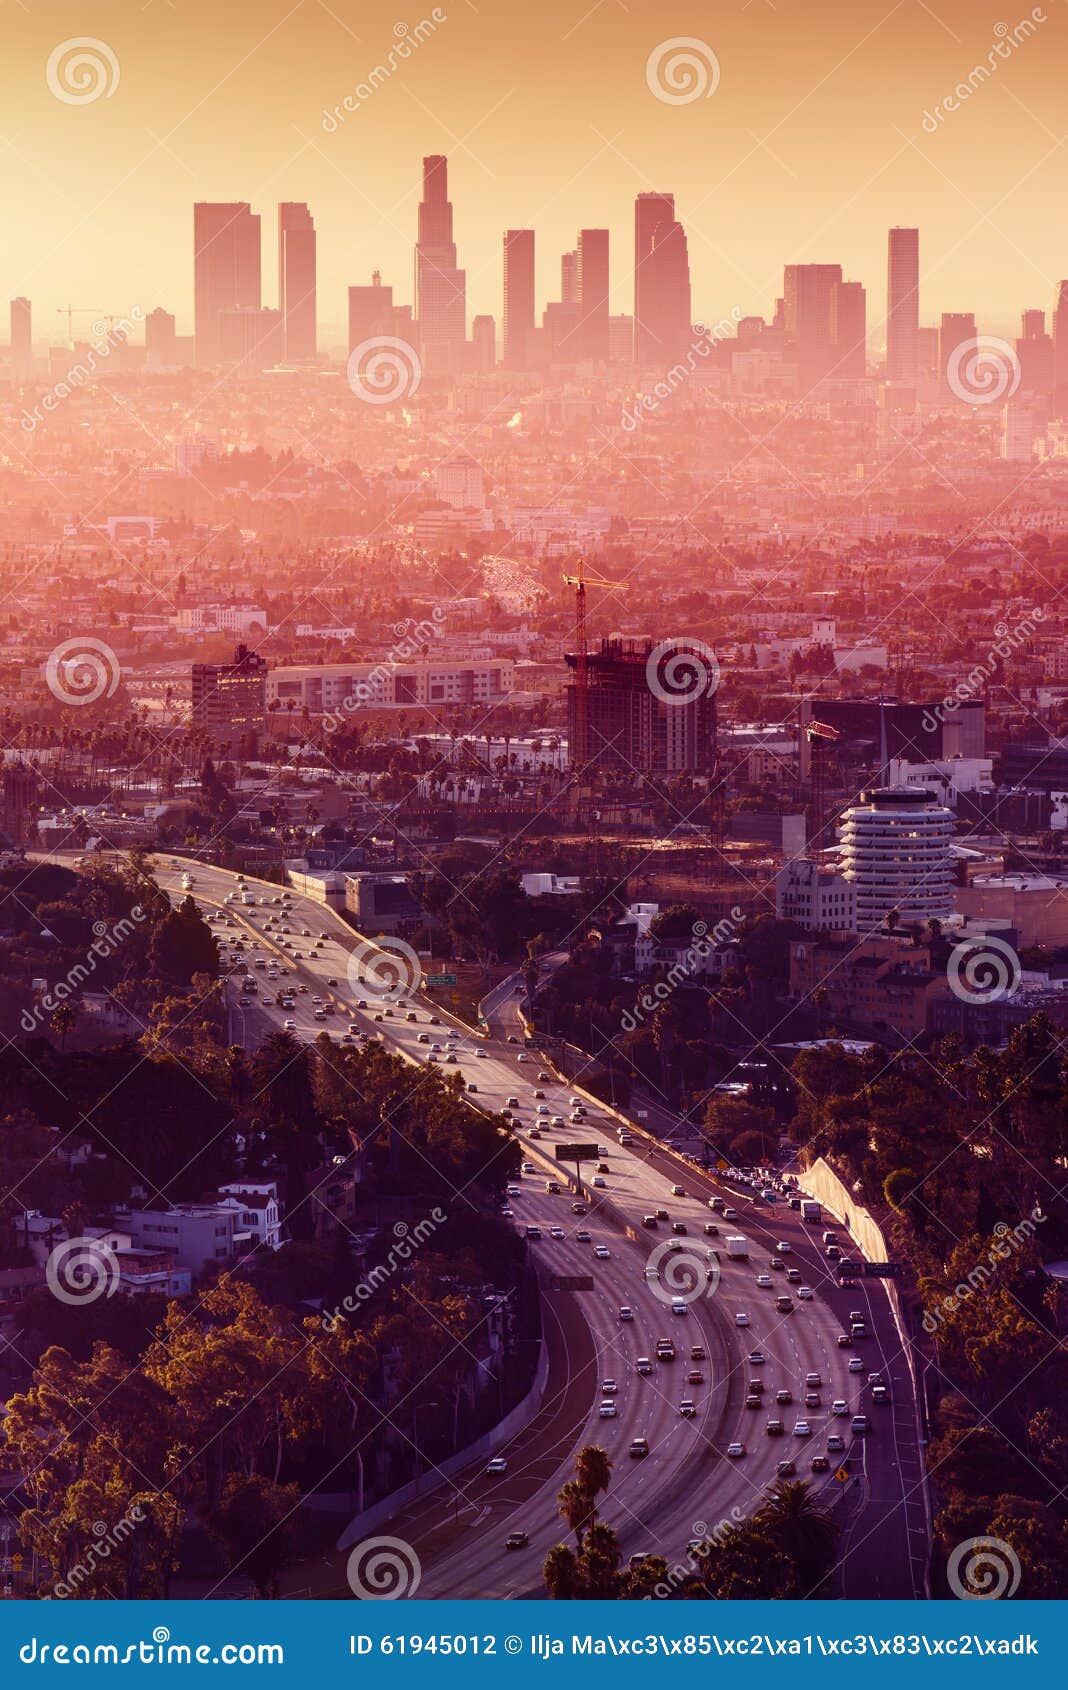 los angeles - california city skyline